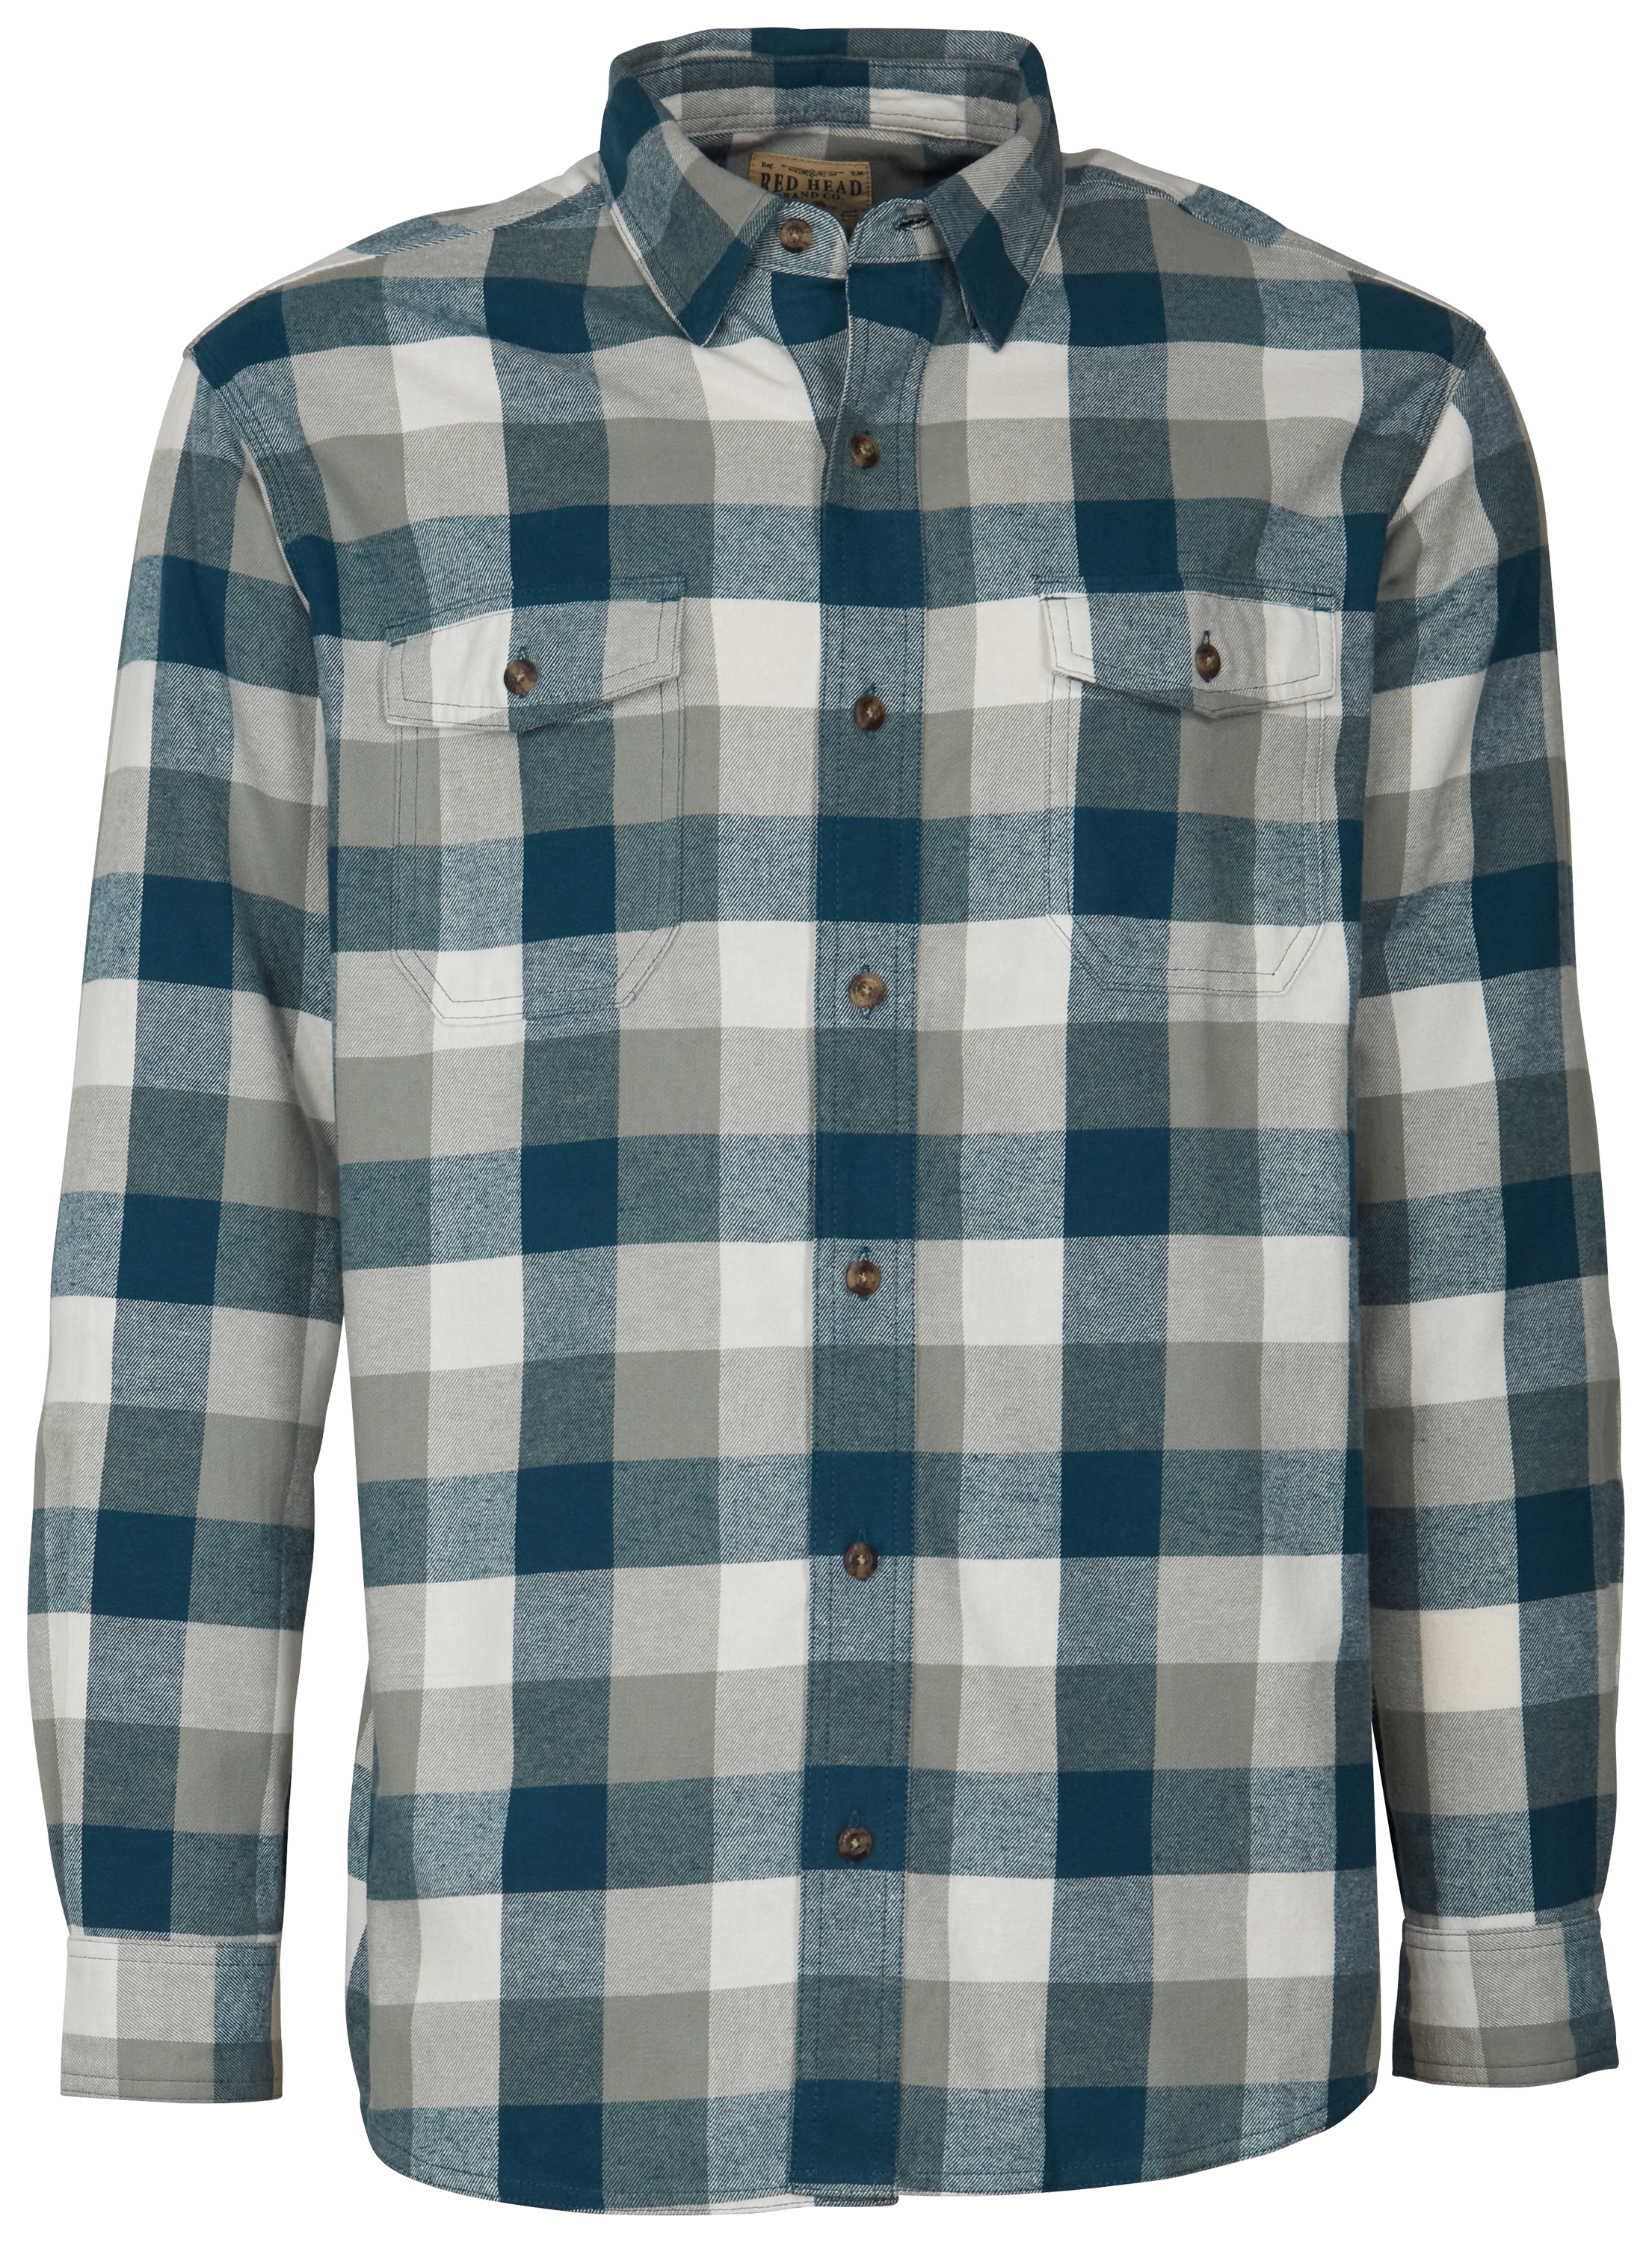 RedHead Buffalo Creek Flannel Long-Sleeve Shirt for Men - Navy/White - M